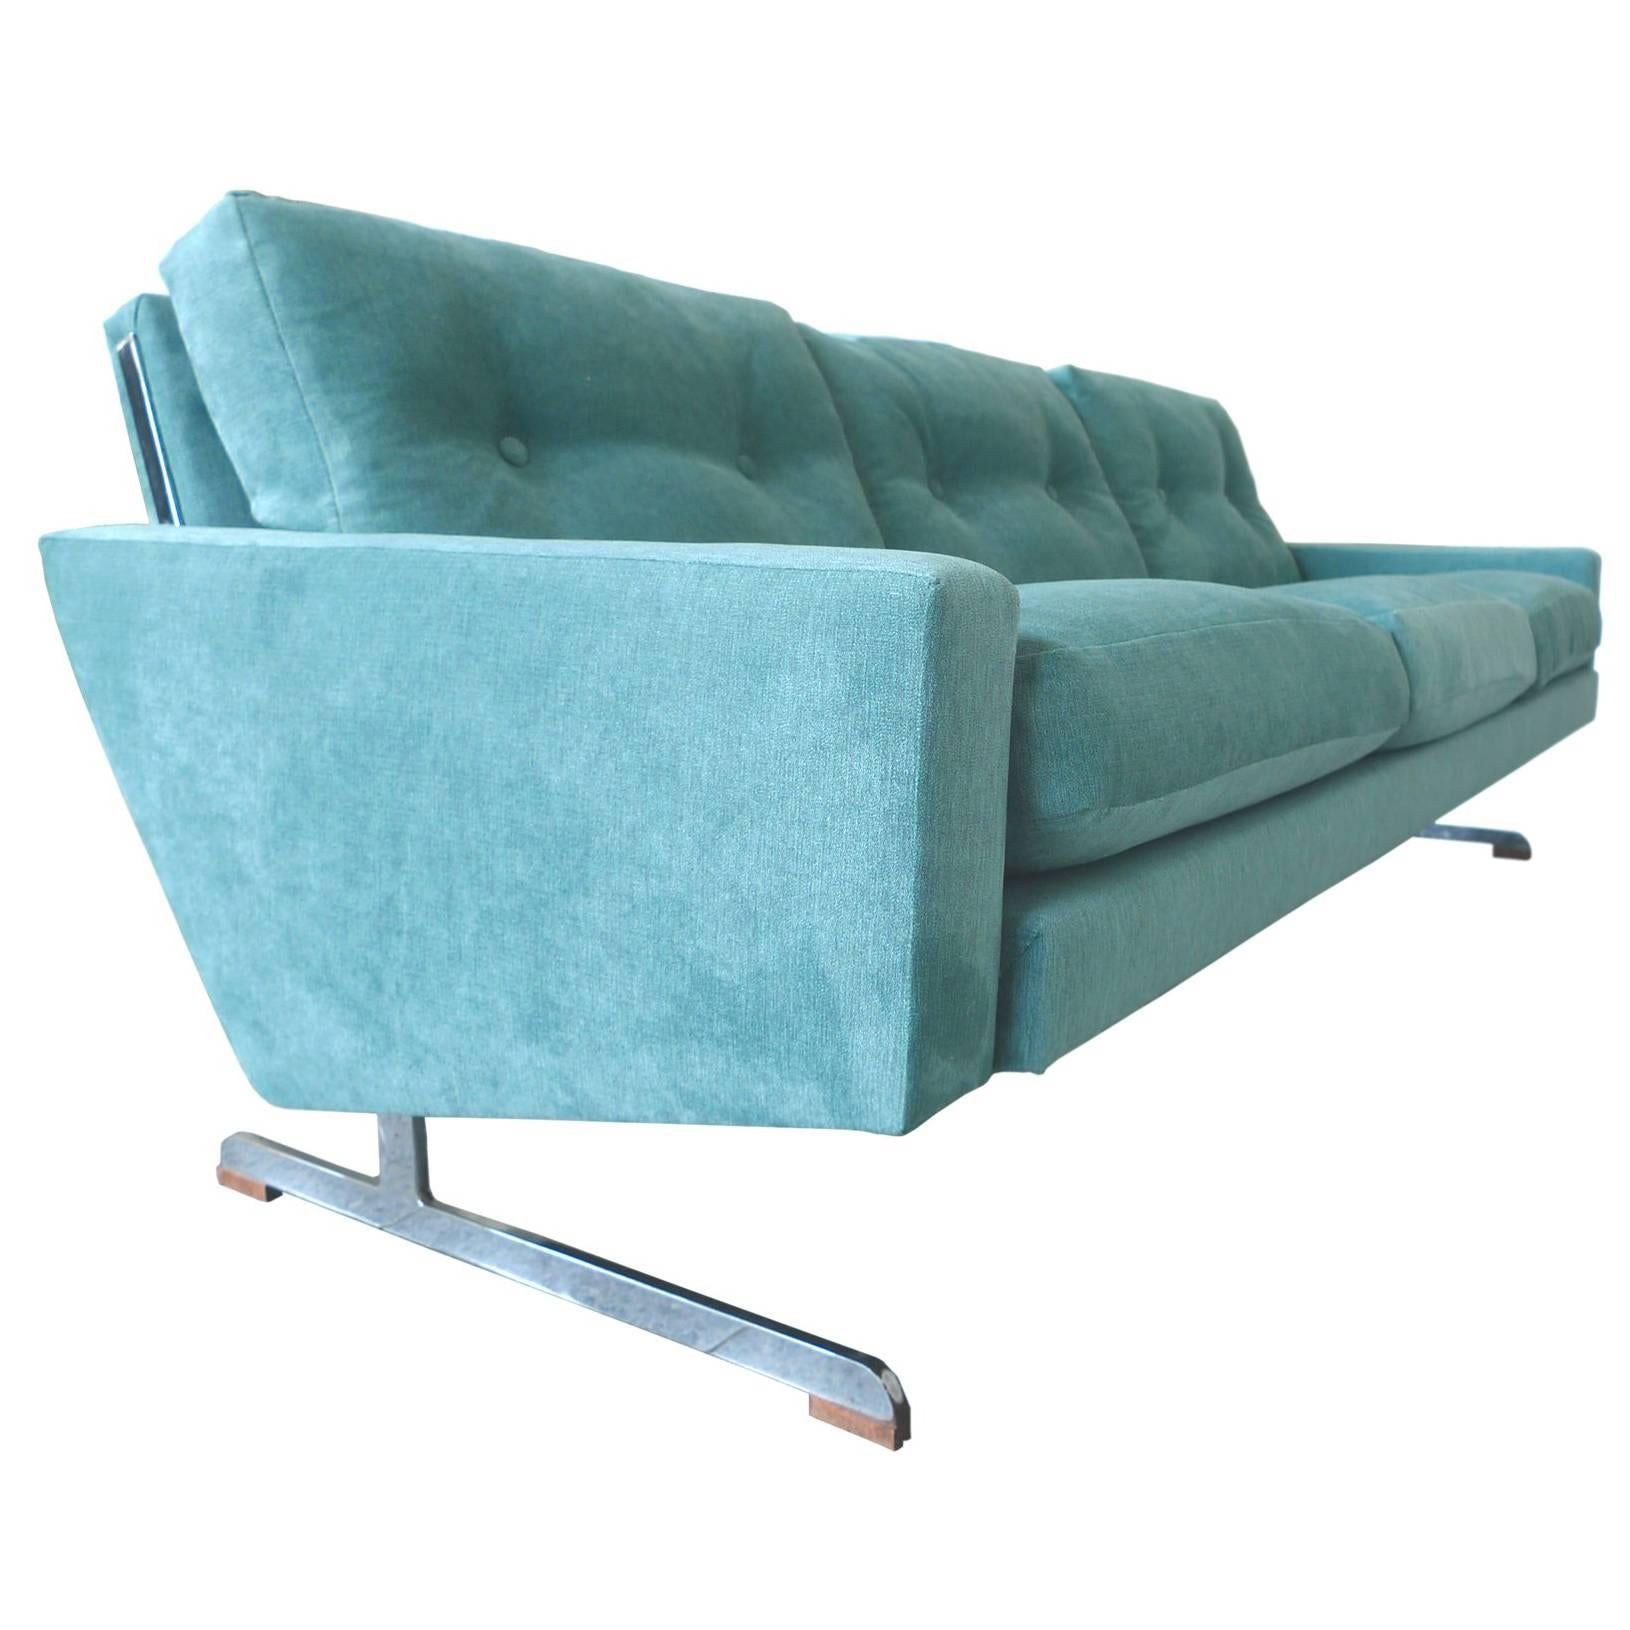 Teal Danish Modern Sofa by Johannes Andersen